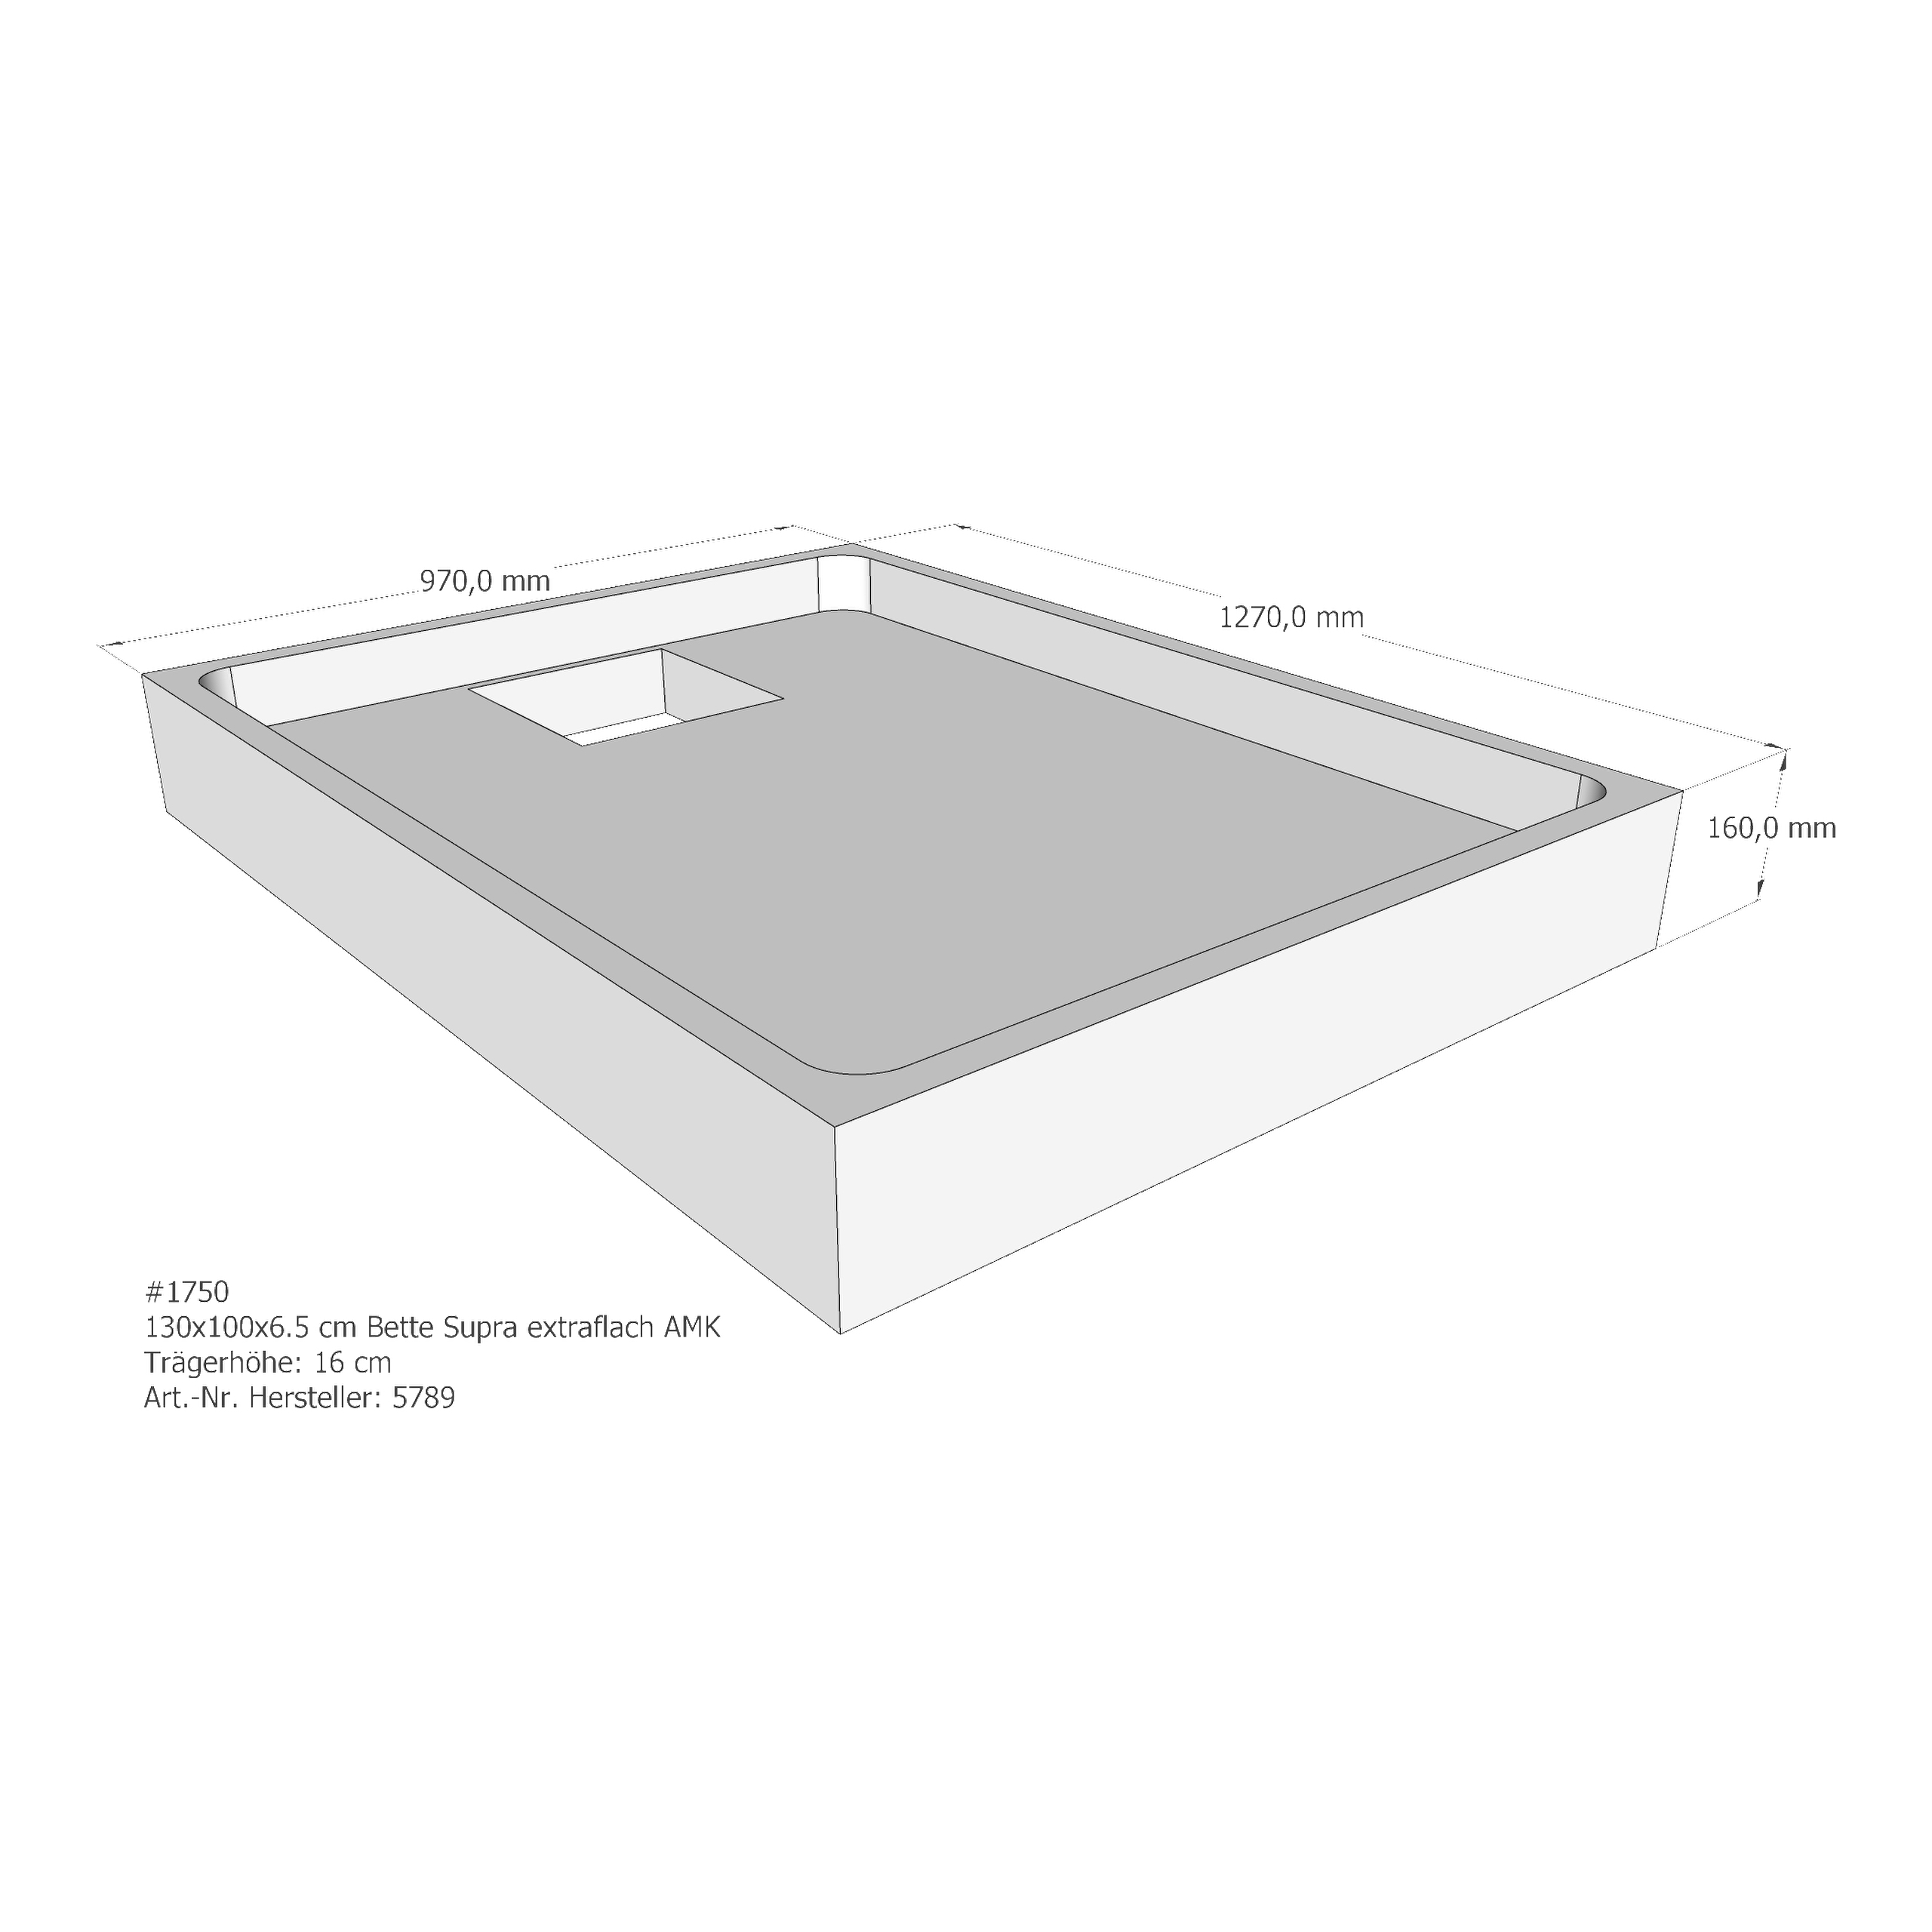 Duschwannenträger Bette BetteSupra (extraflach) 130x100x6,5 cm AMK210